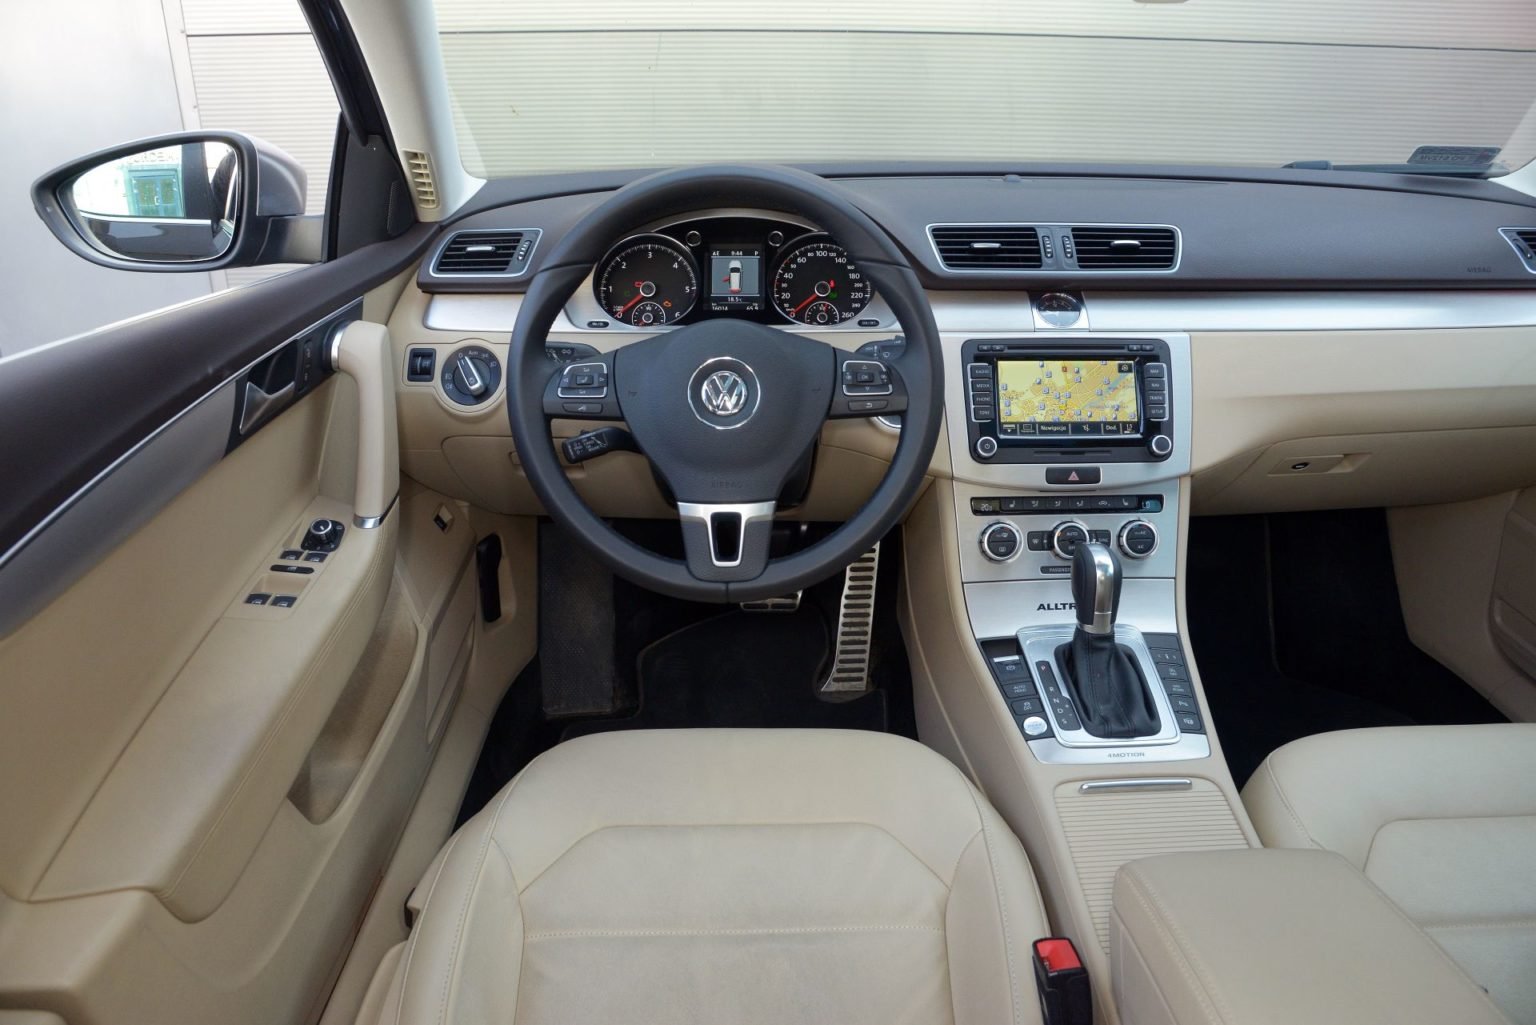 Używany Volkswagen Passat B7 (20102014) opinie, dane